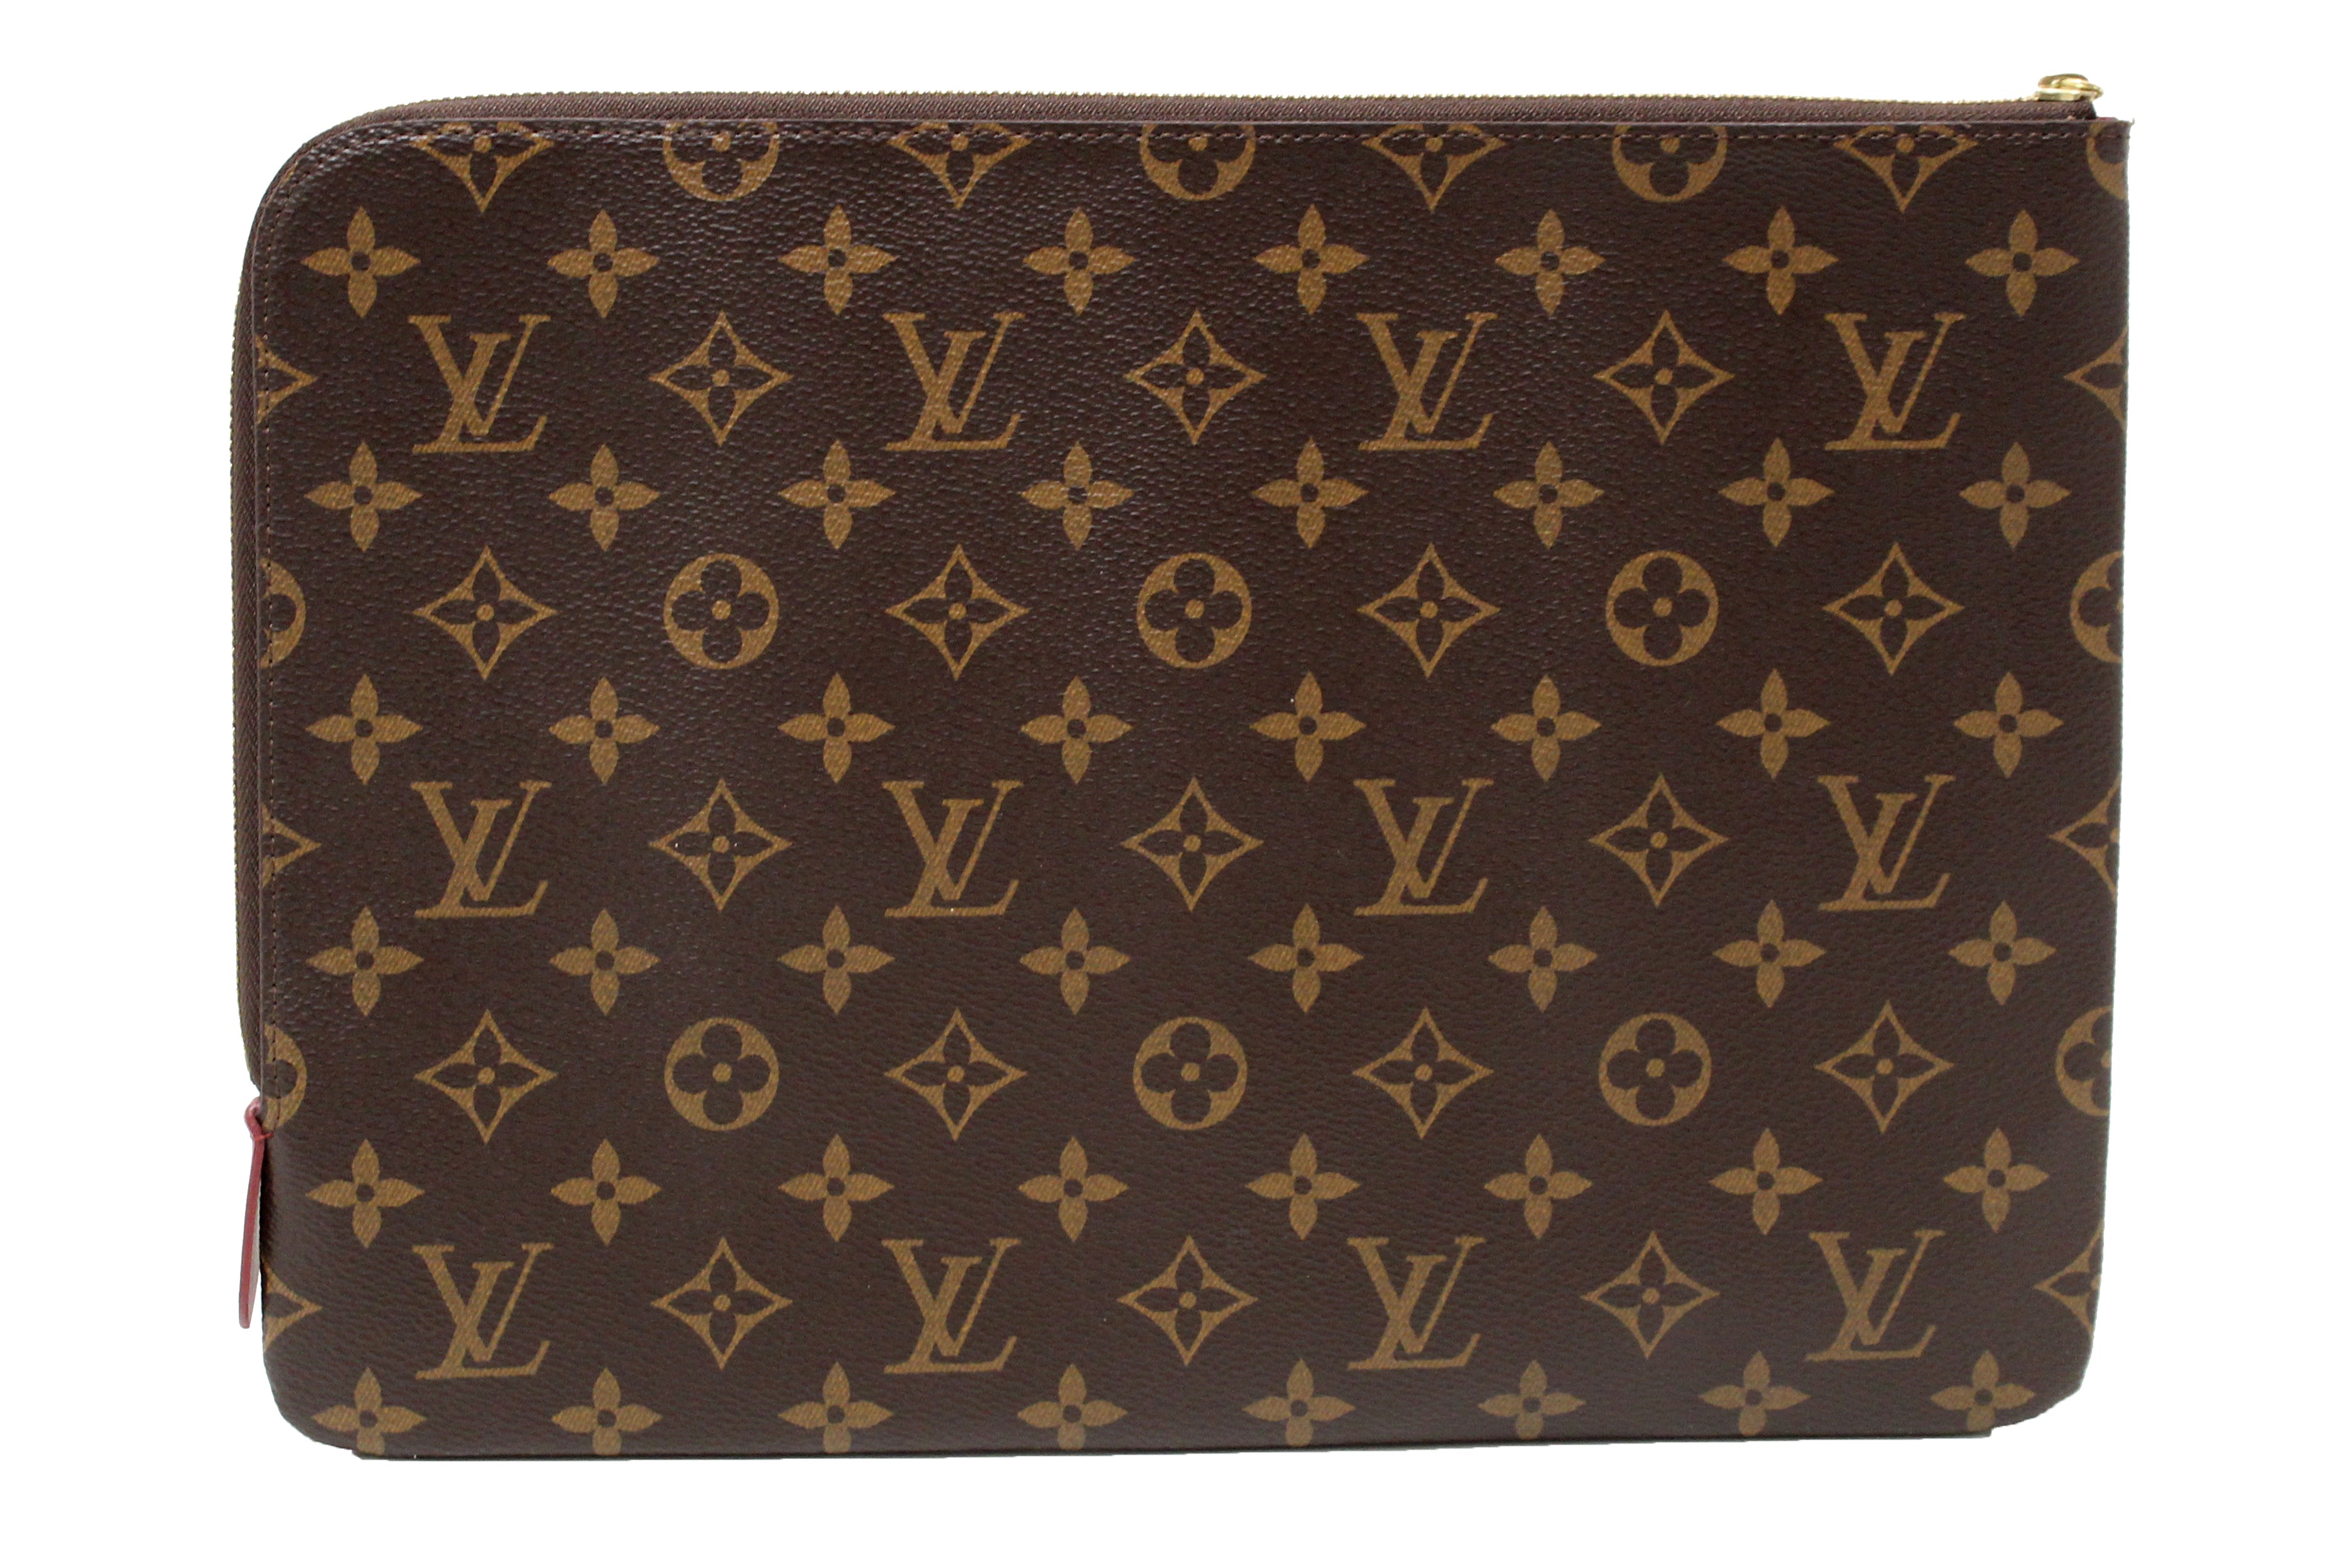 Louis Vuitton Etui Voyage MM review! What fits inside & wear